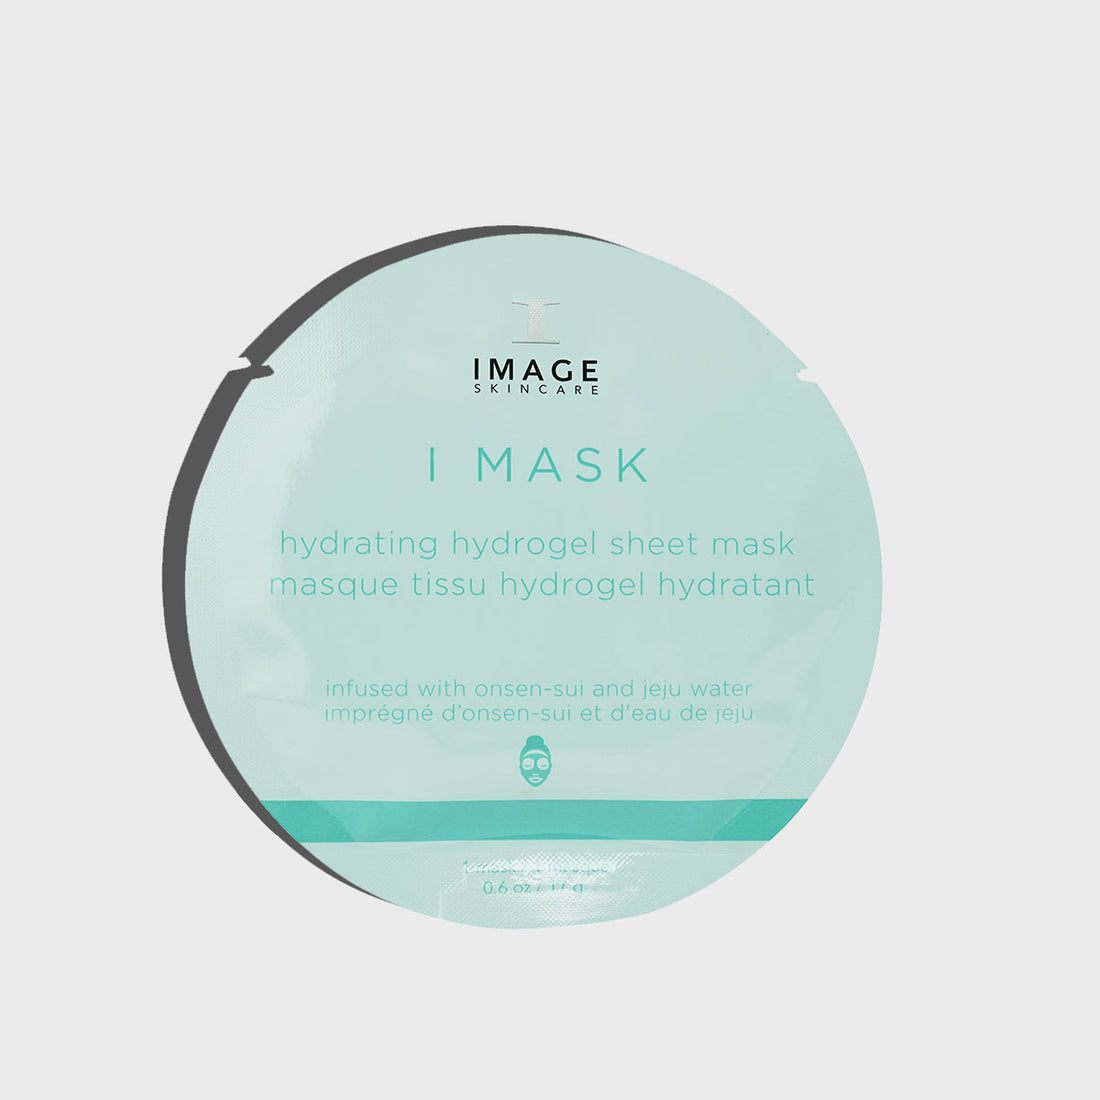 I MASK - Hydrating Hydrogel Sheet Mask